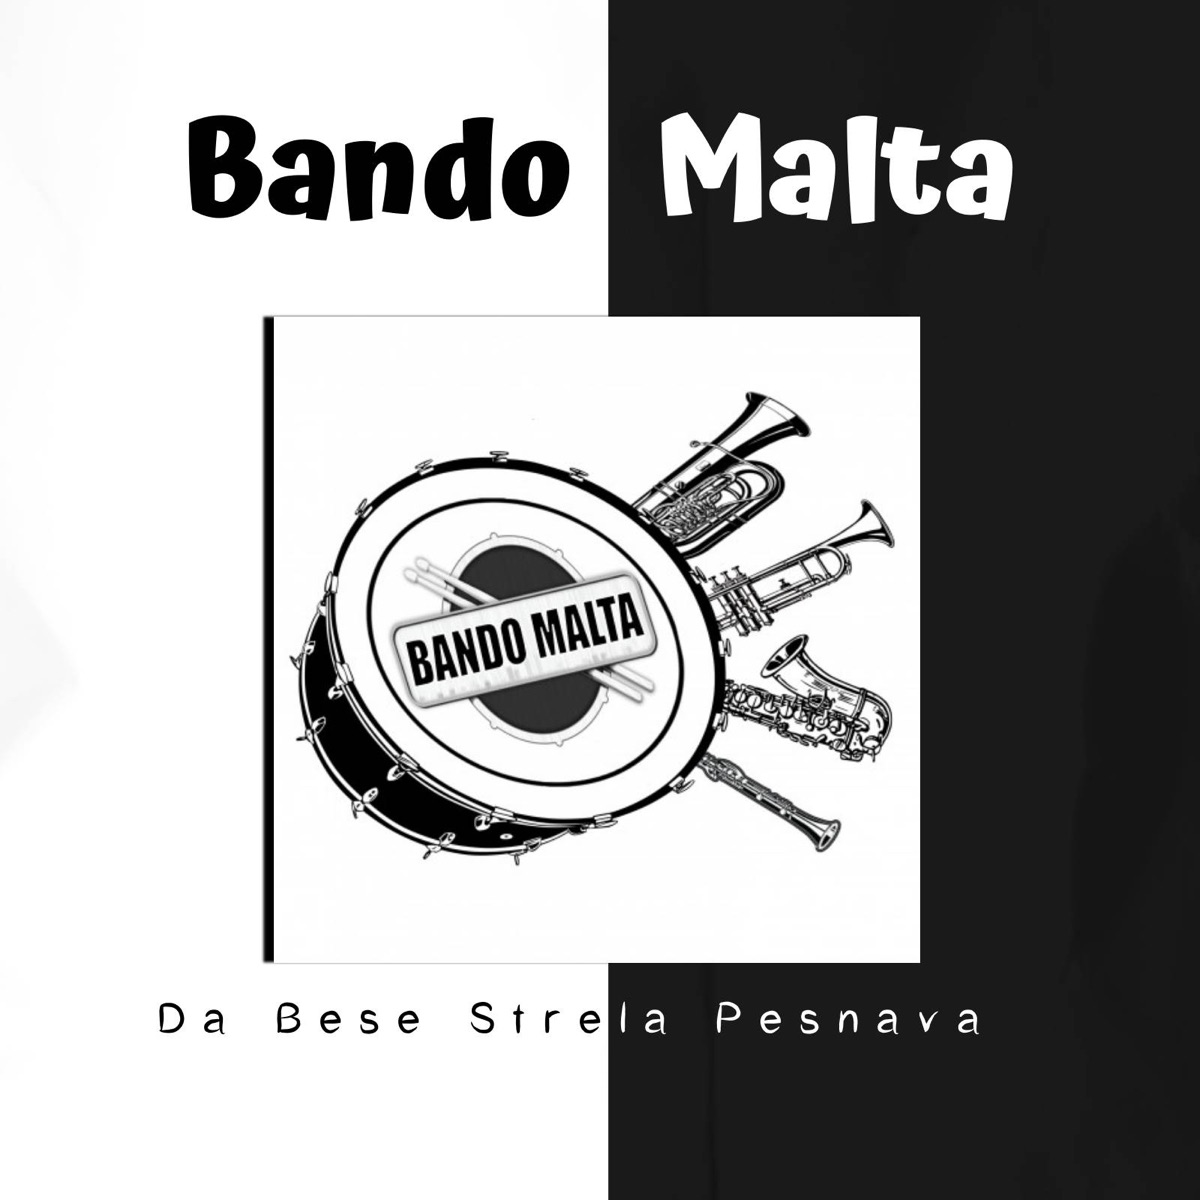 Dosta Vreme Ergen Odev (feat. Ekrem Erşan İkilisi) - Single by Bando Malta  on Apple Music